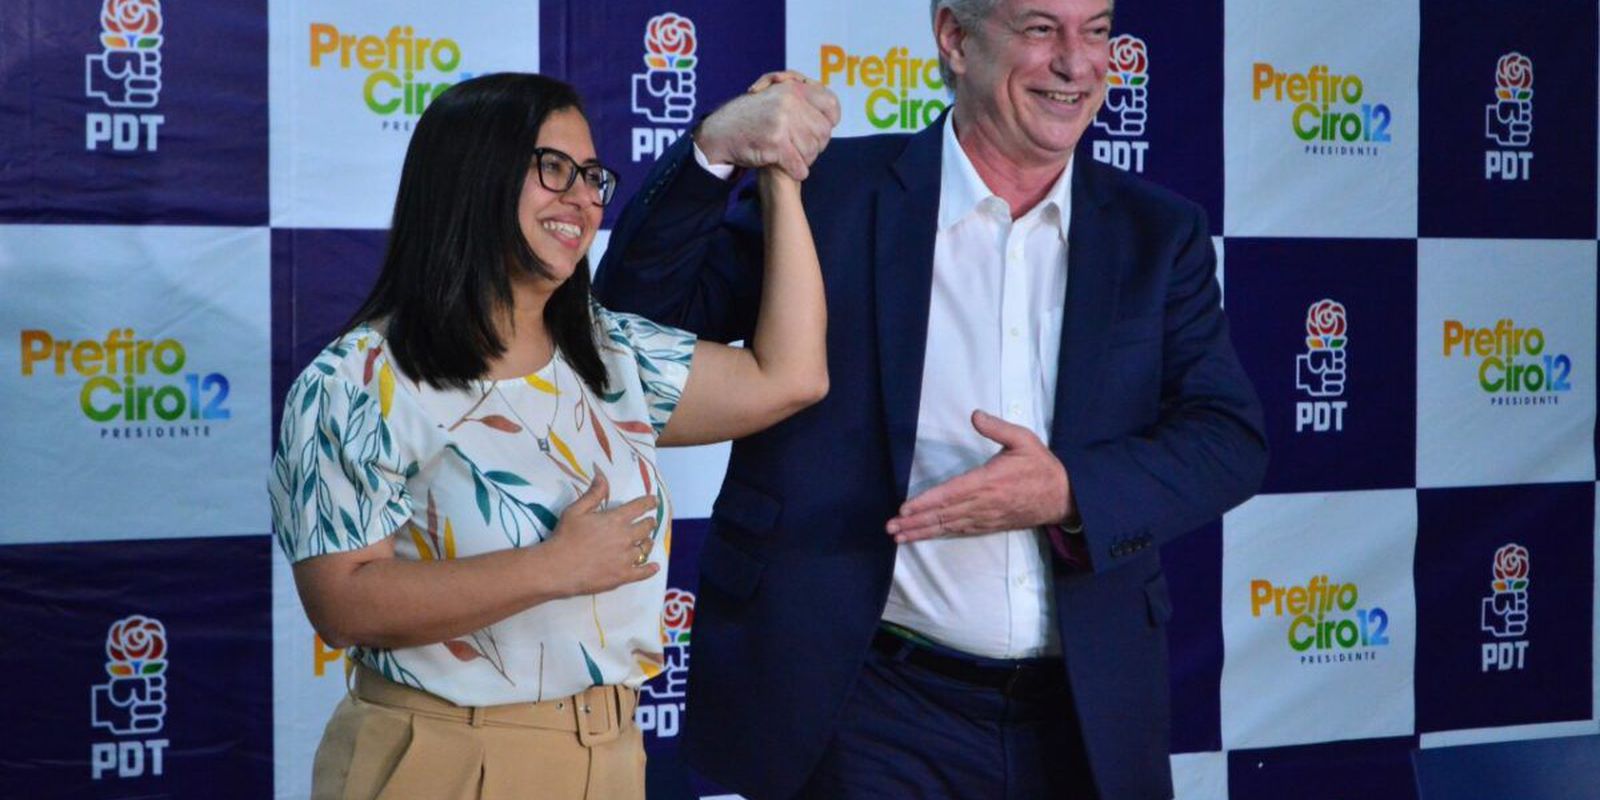 PDT chooses Ana Paula Matos to be vice-president of Ciro Gomes